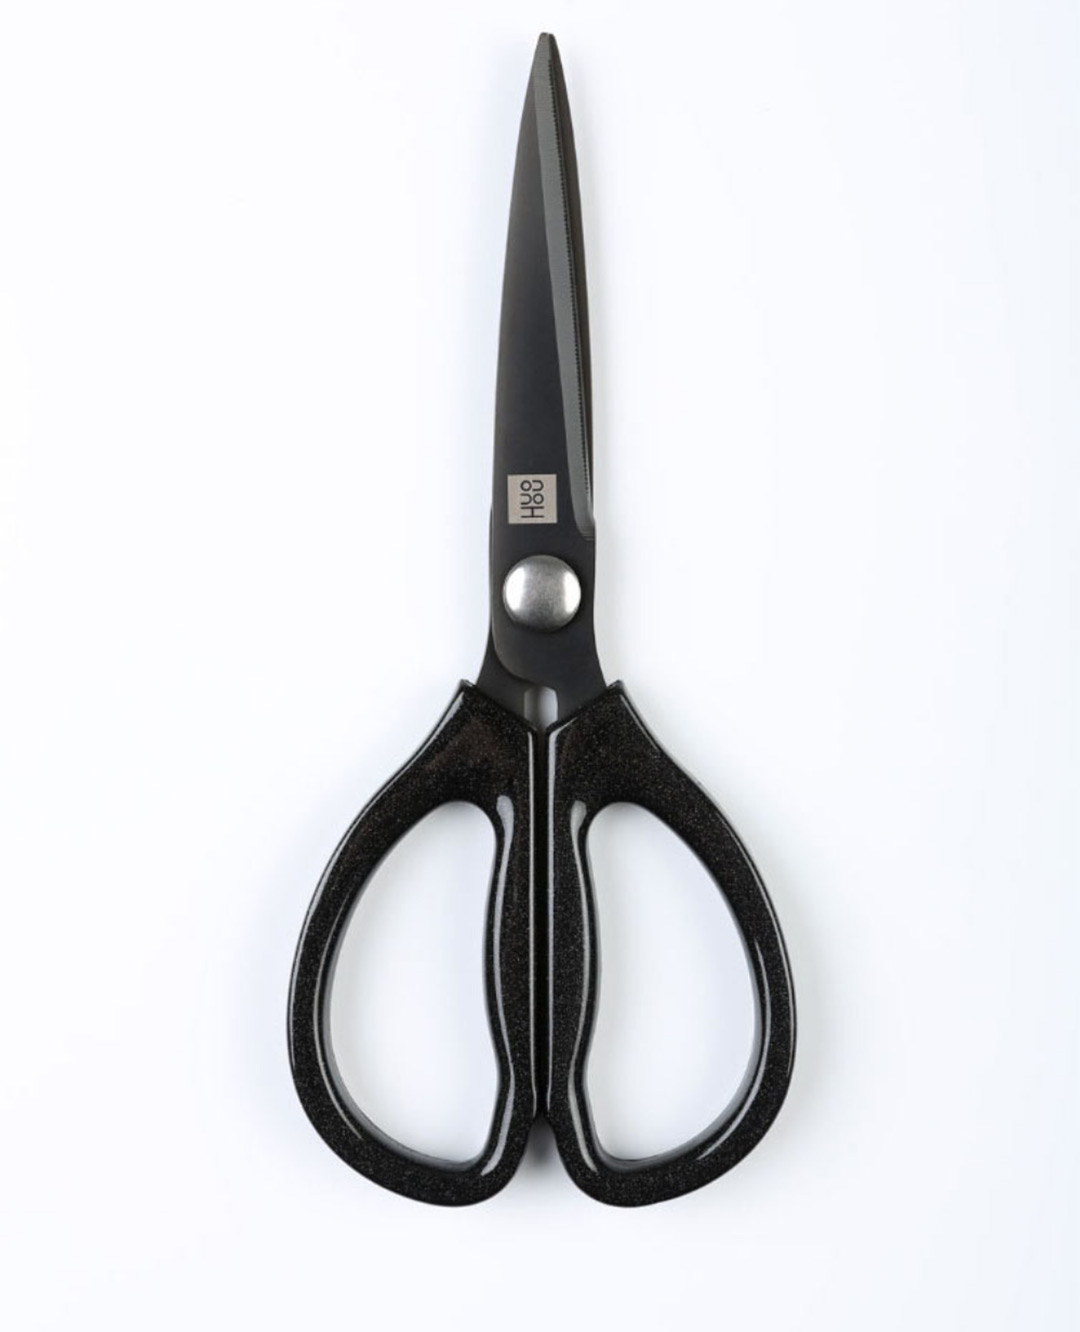 HuoHou Stainless Steel Kitchen Scissor